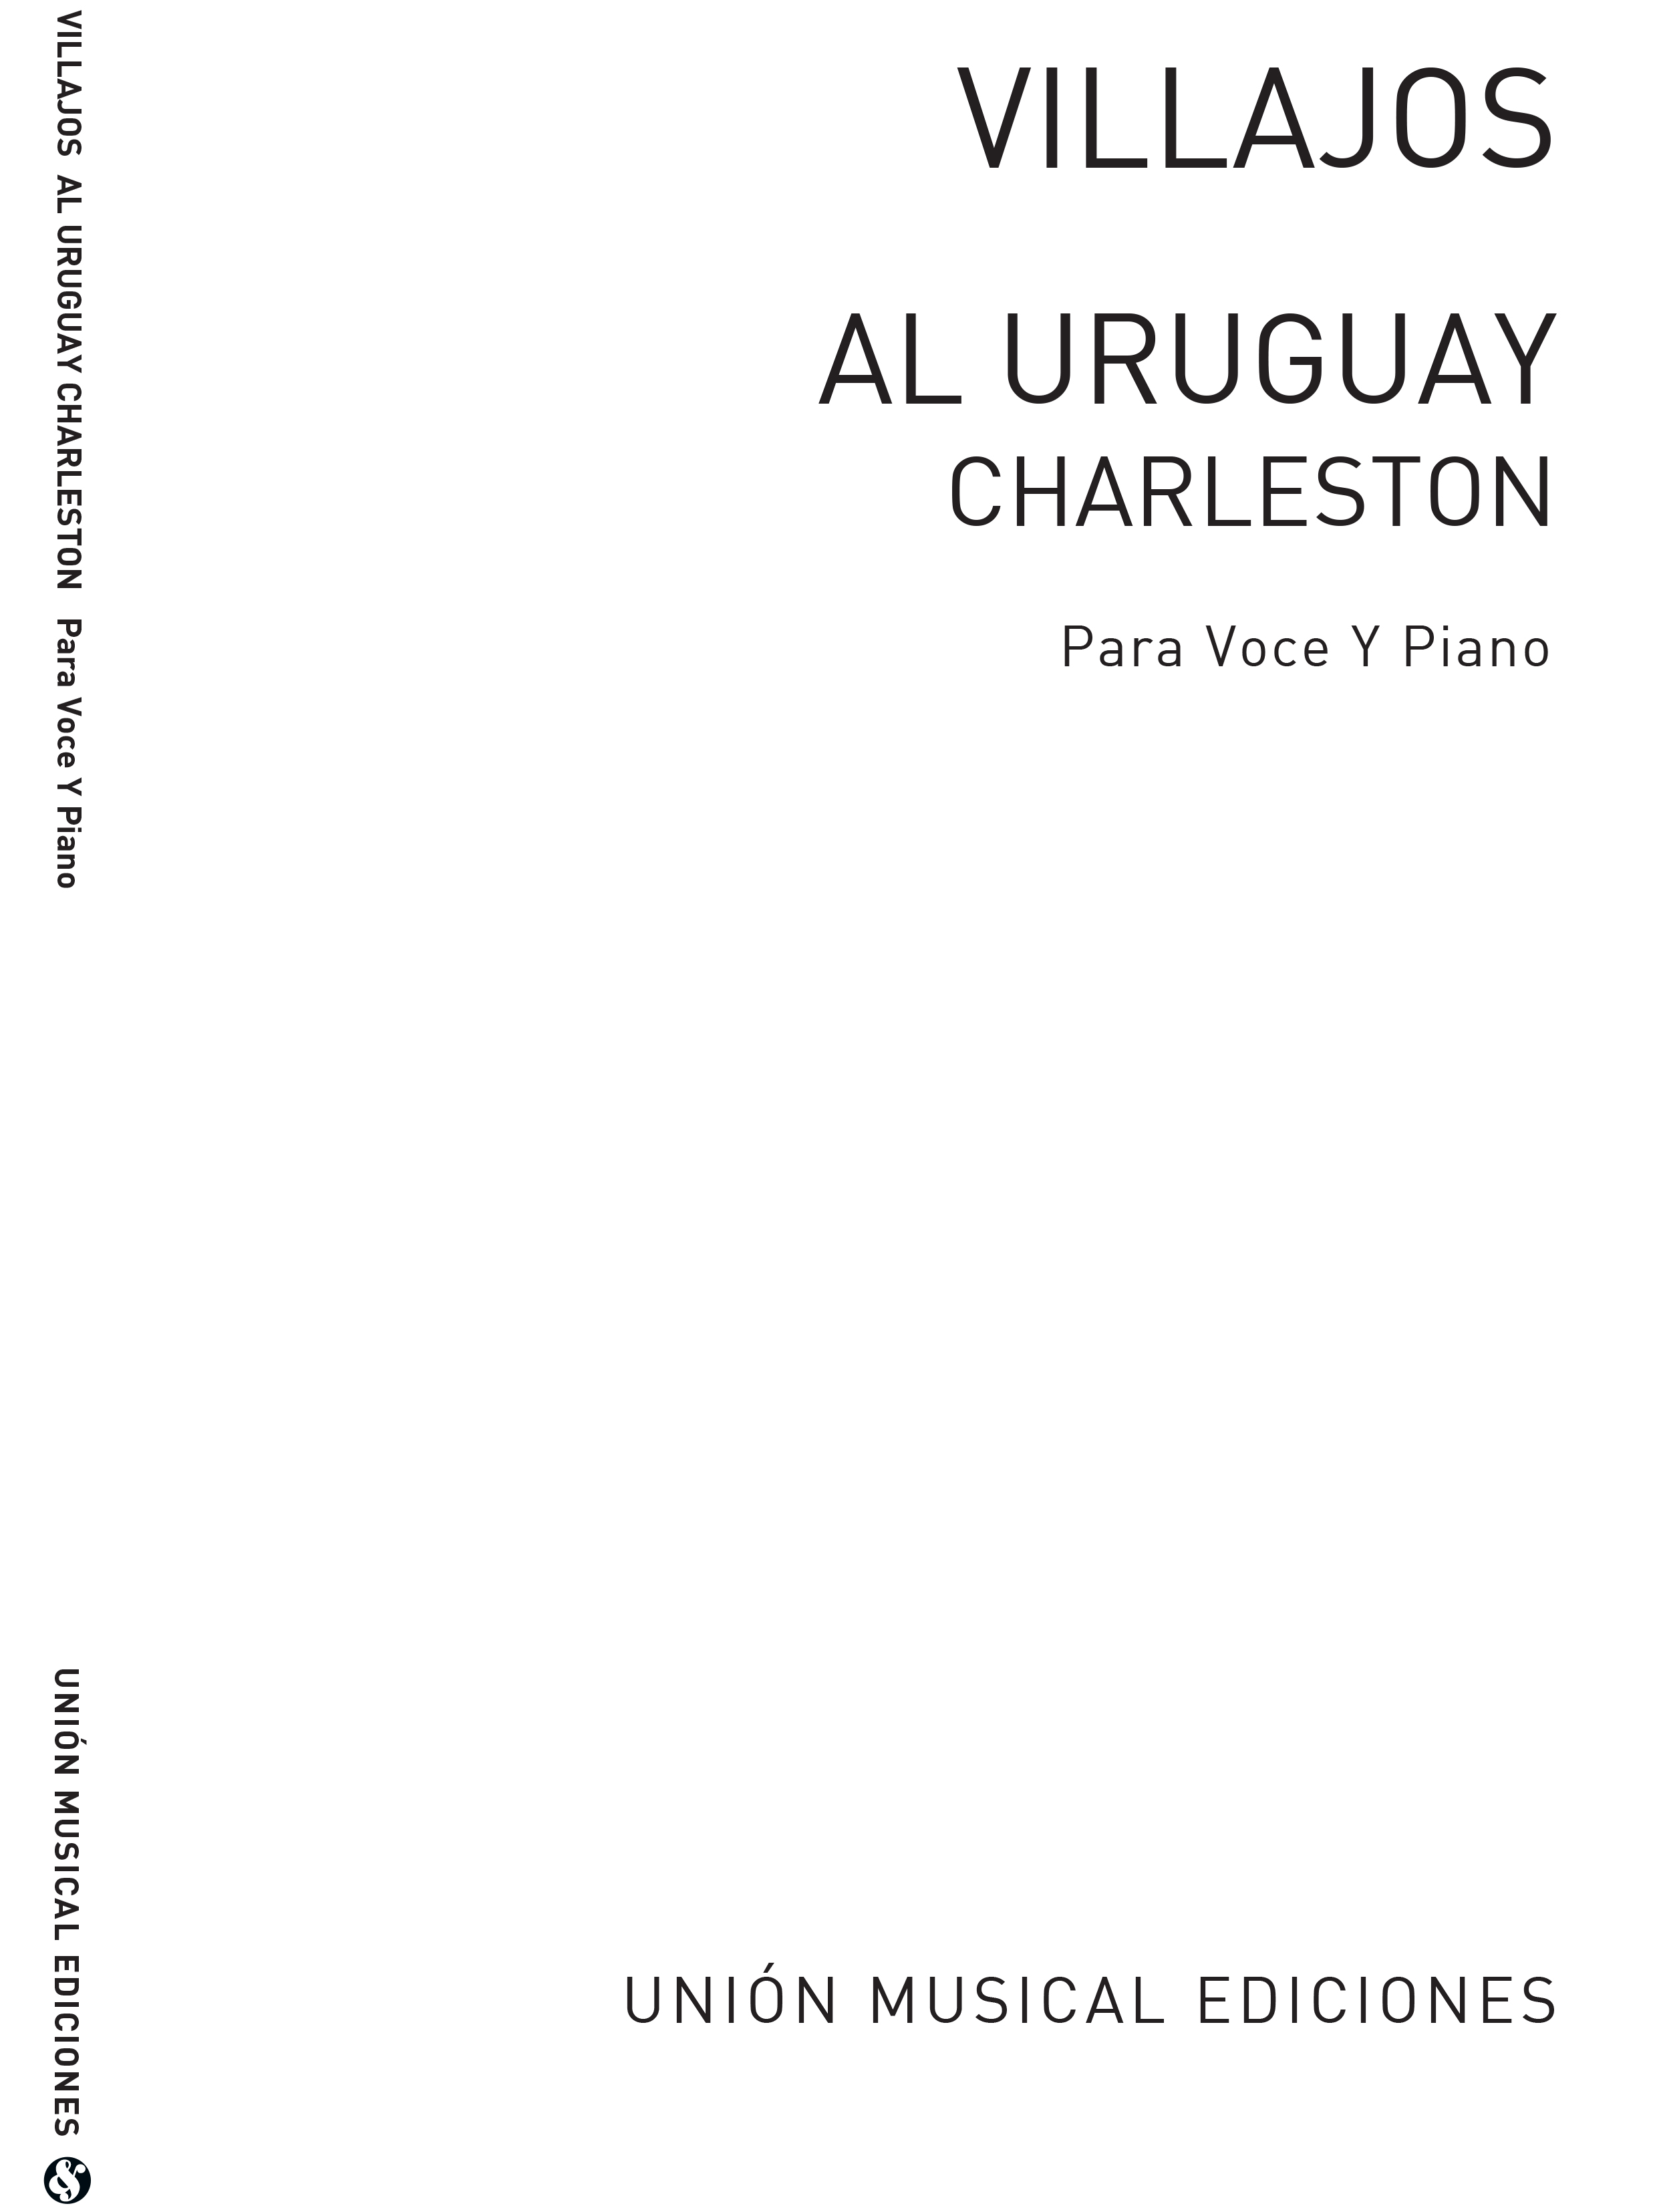 Angel Ortiz De Villajos: Al Uruguay (Charleston): Voice: Single Sheet